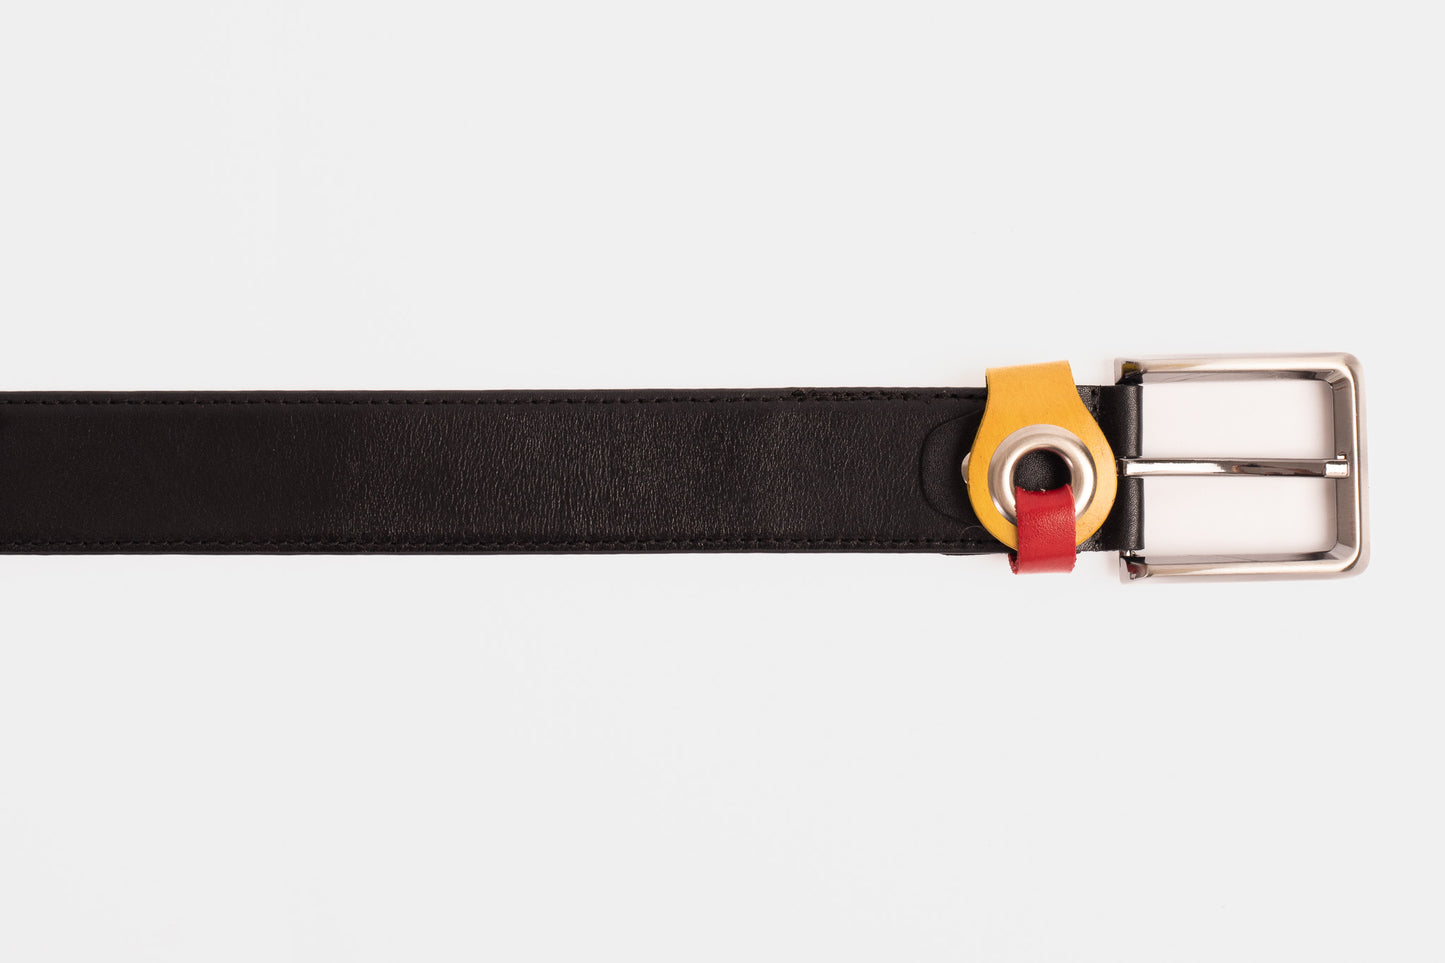 The Jackie Black Leather Belt